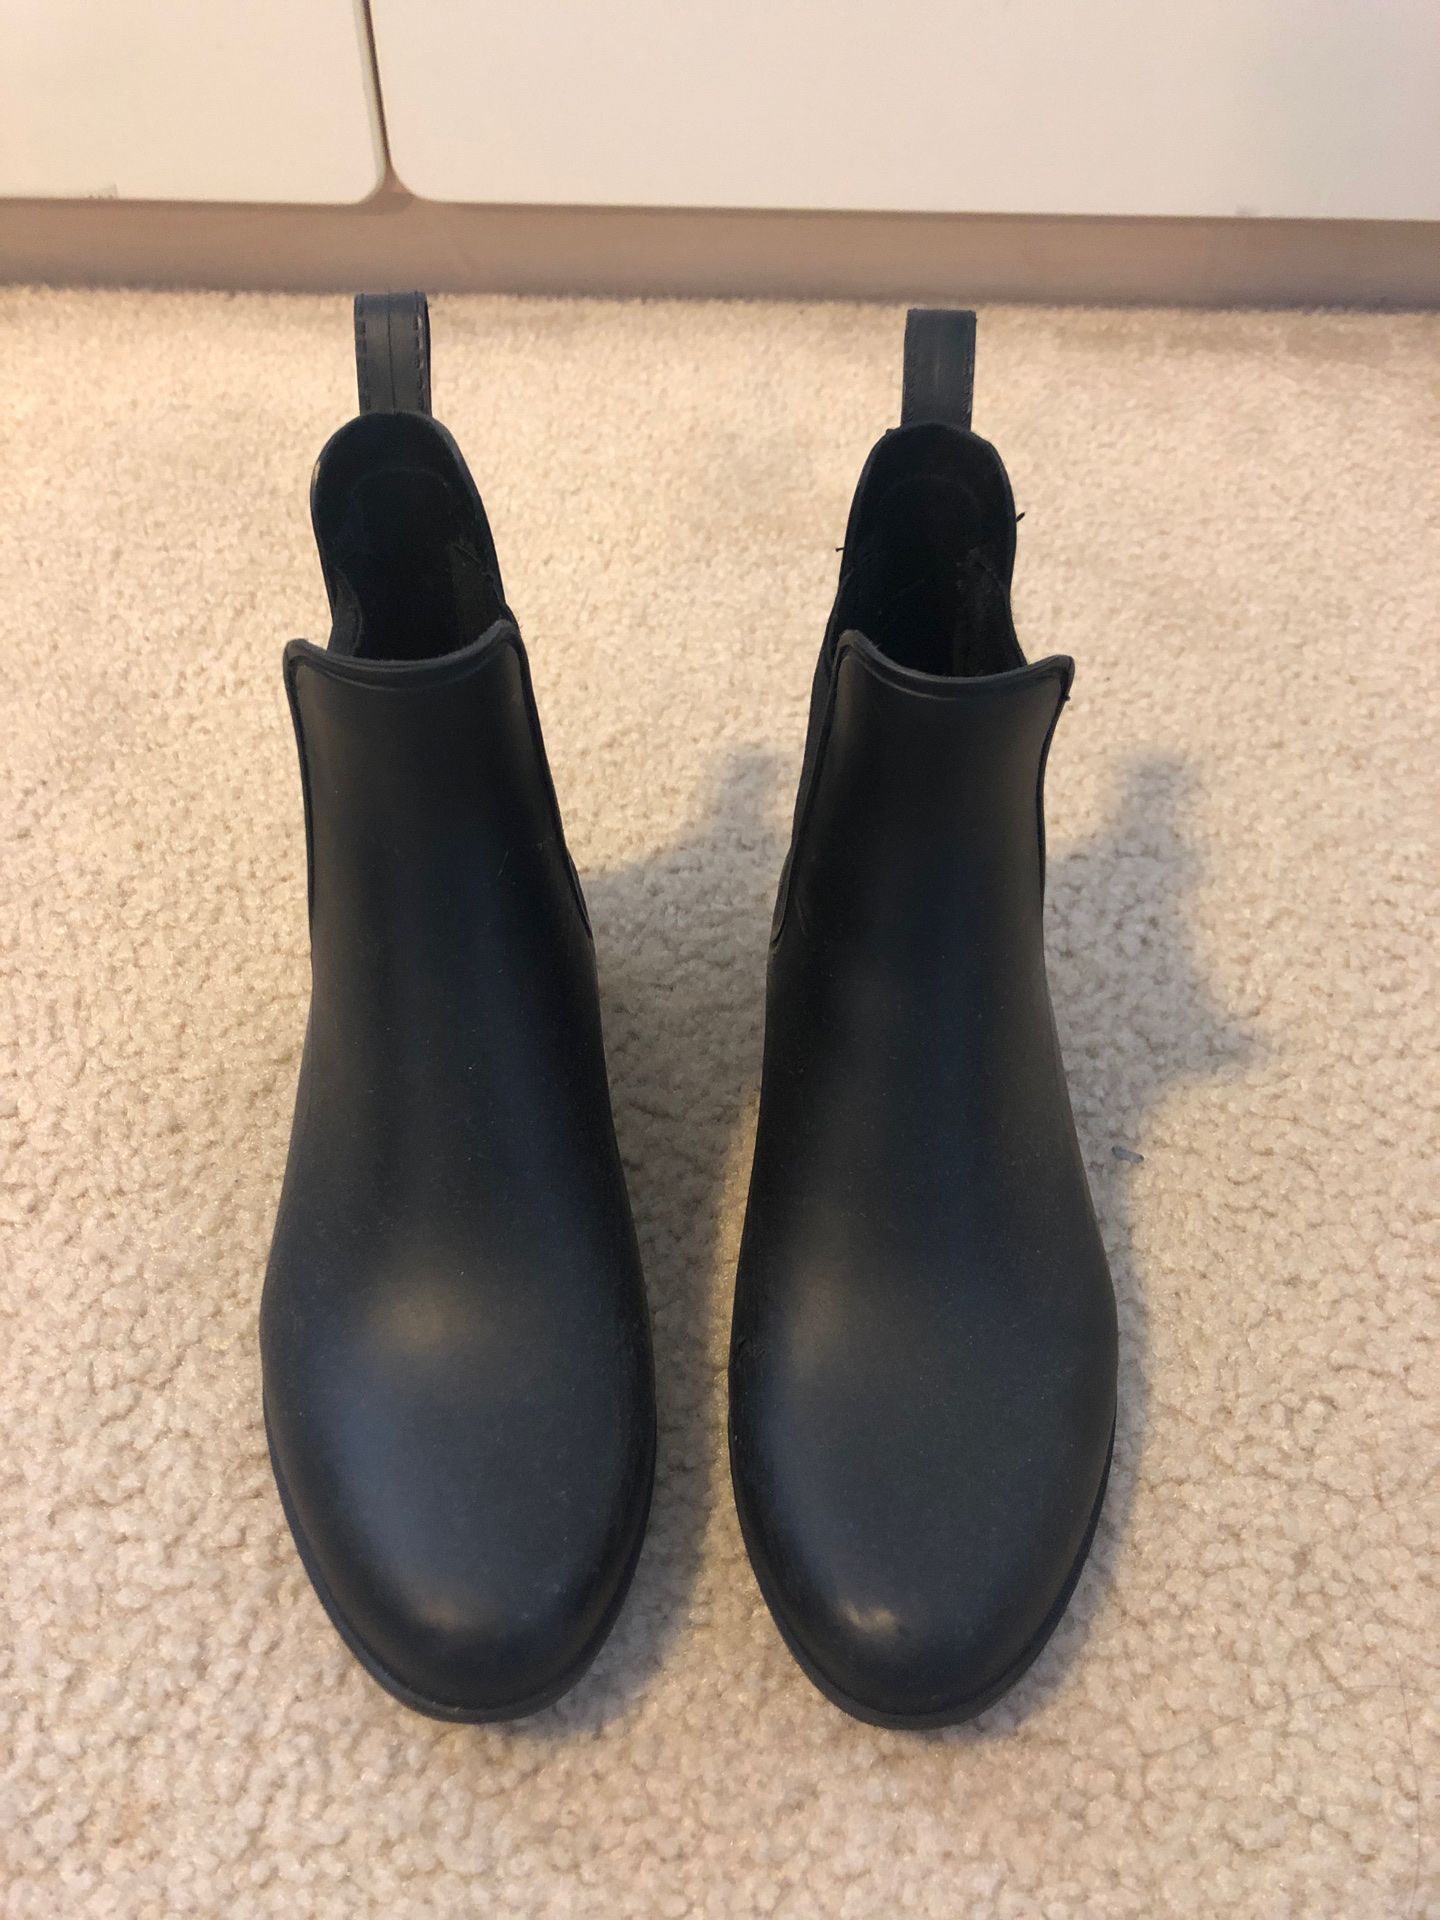 JCrew rain boots